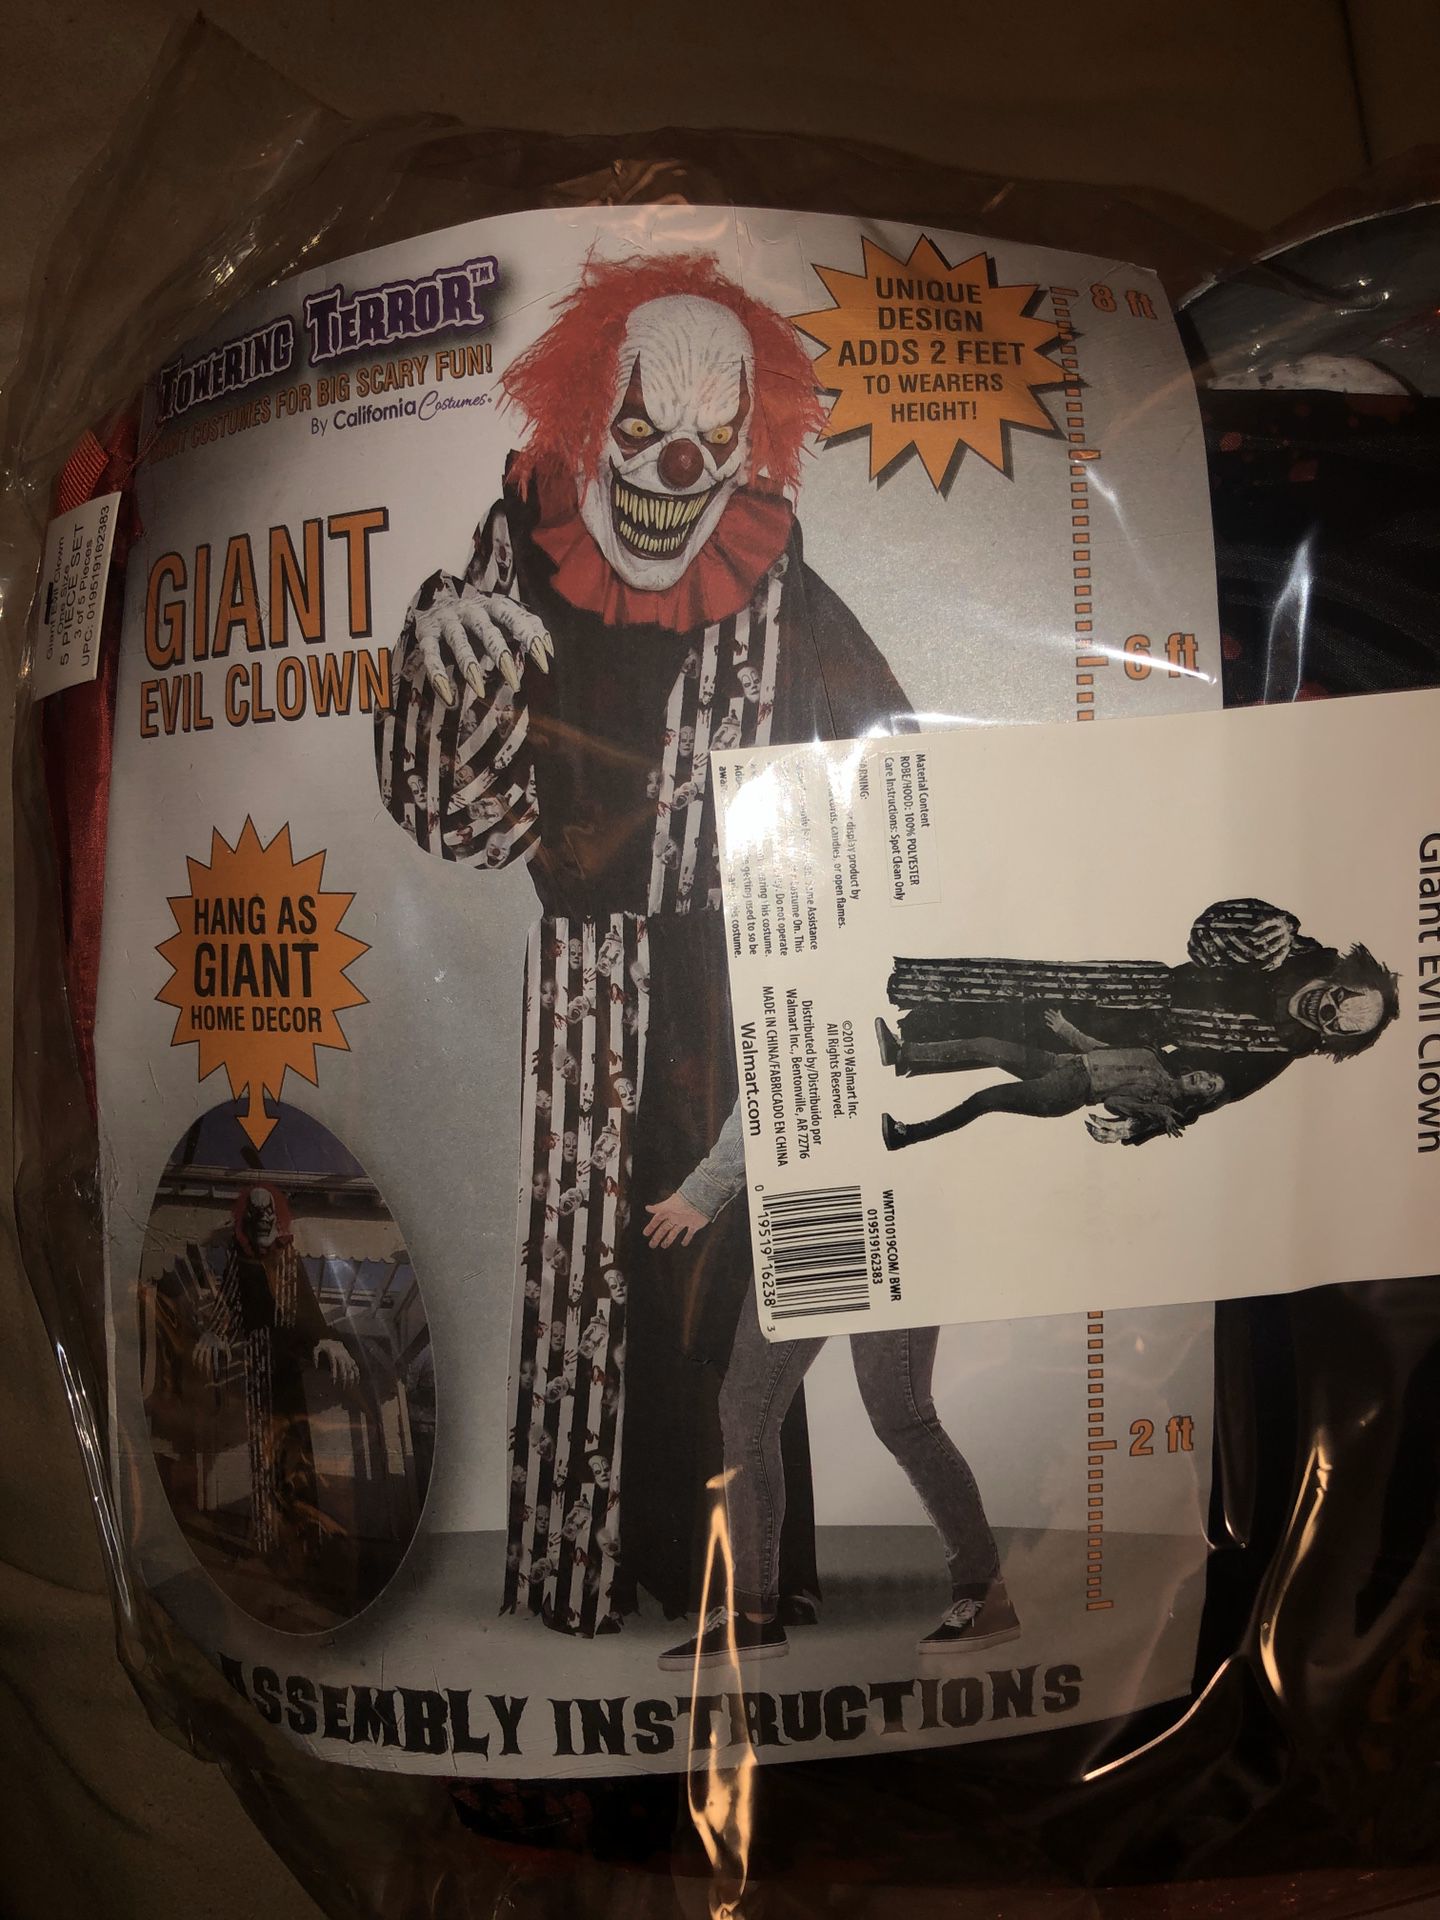 Giant Halloween Clown costume - 8 feet tall